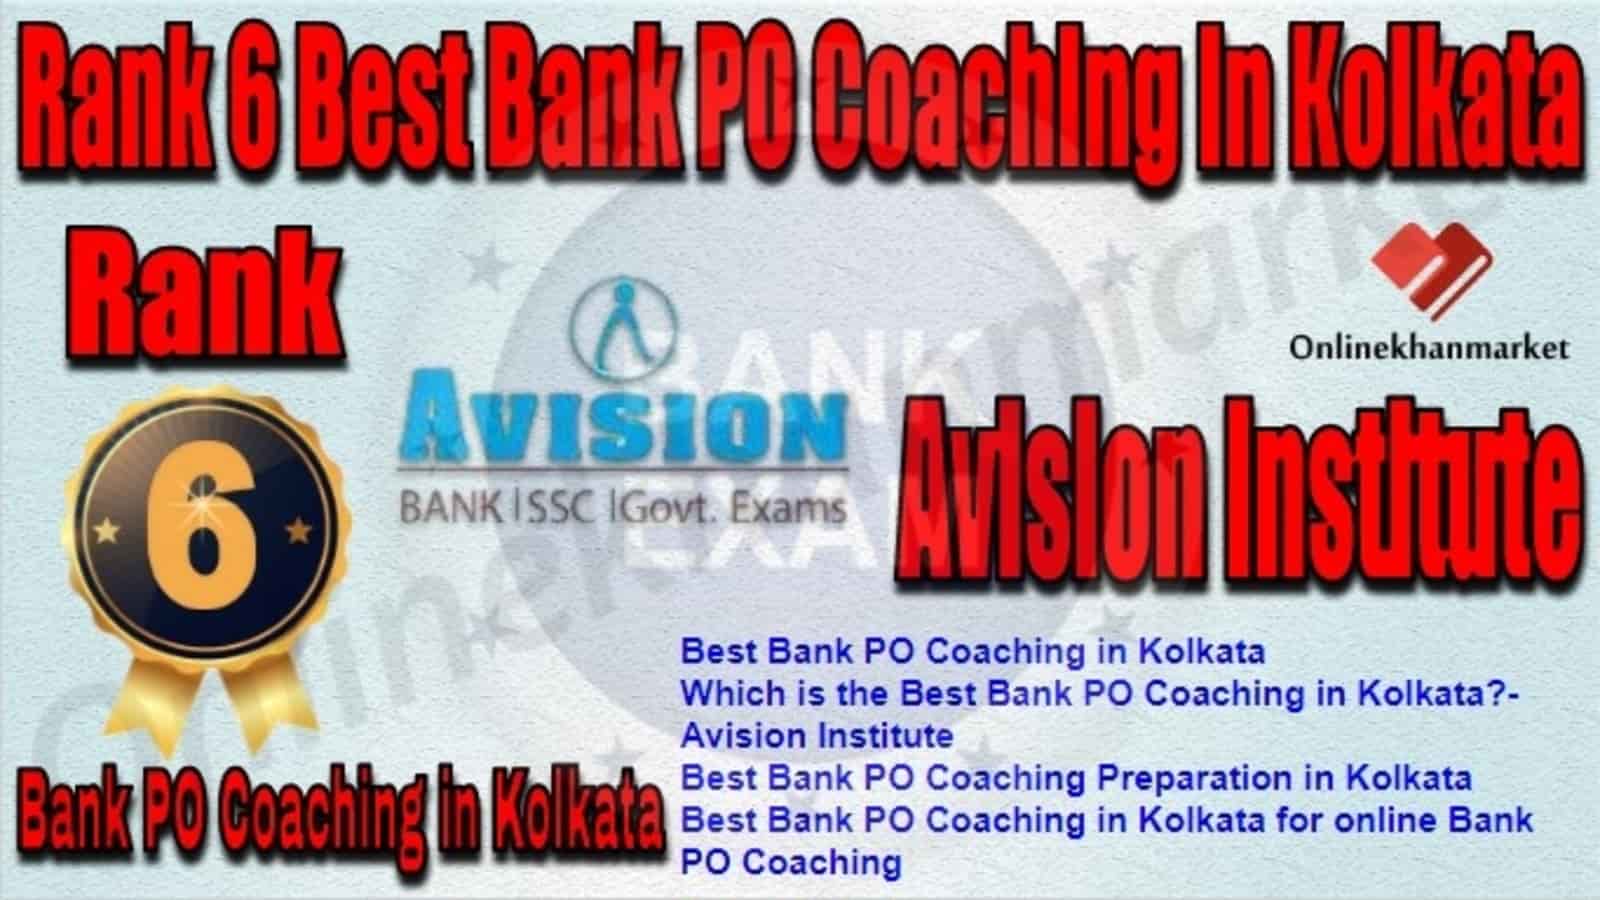 Rank 6 Best Bank PO Coaching in Kolkata